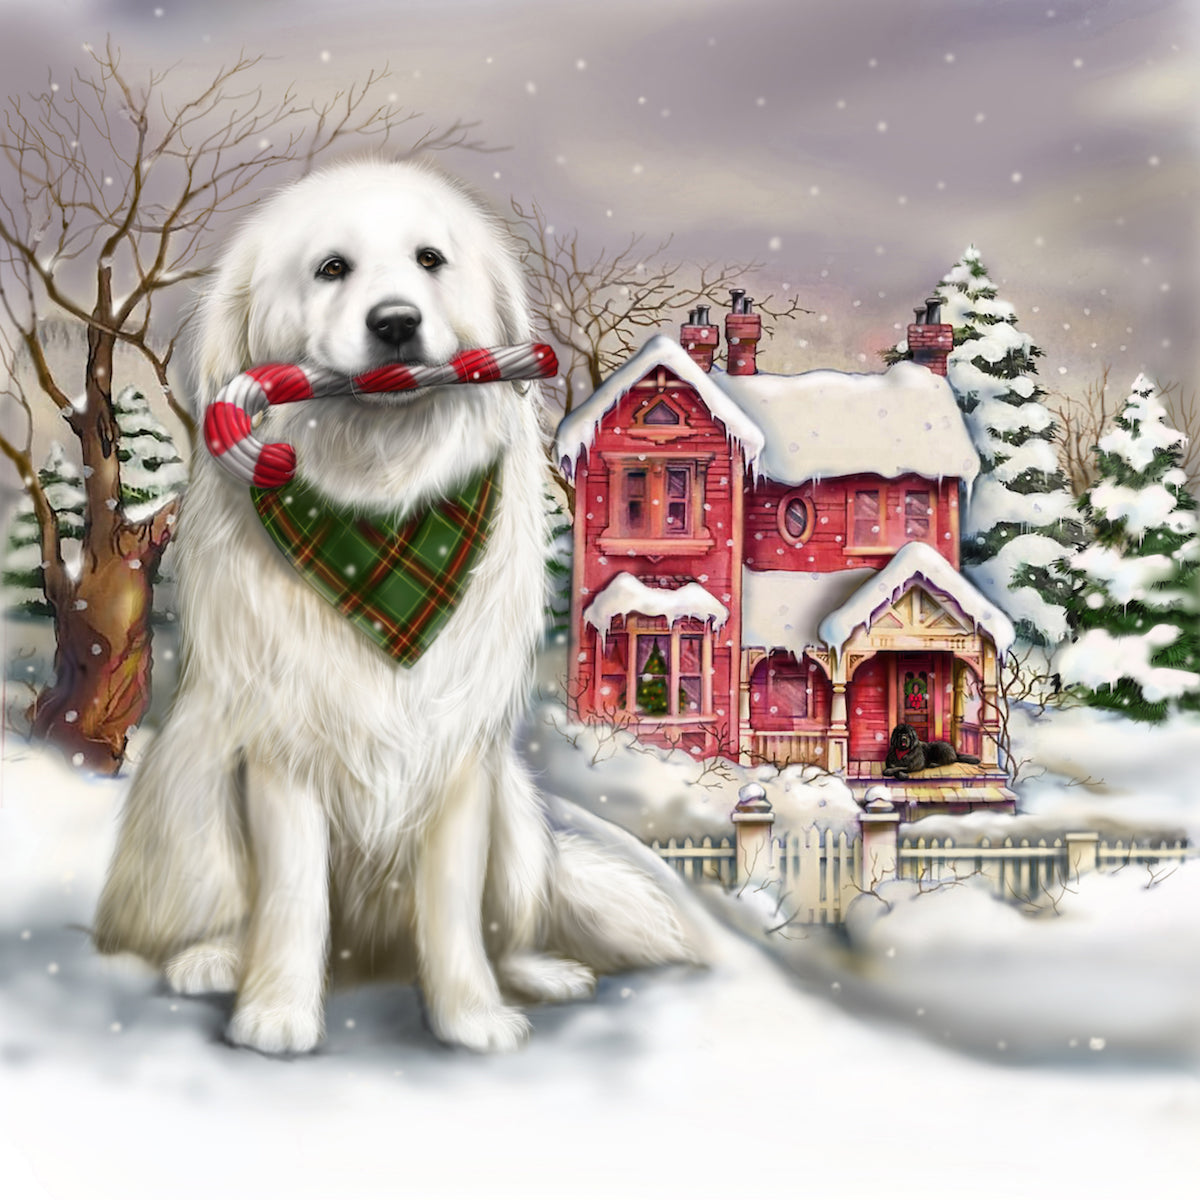 Big dog Christmas, pyr & newf on porch - sold individually